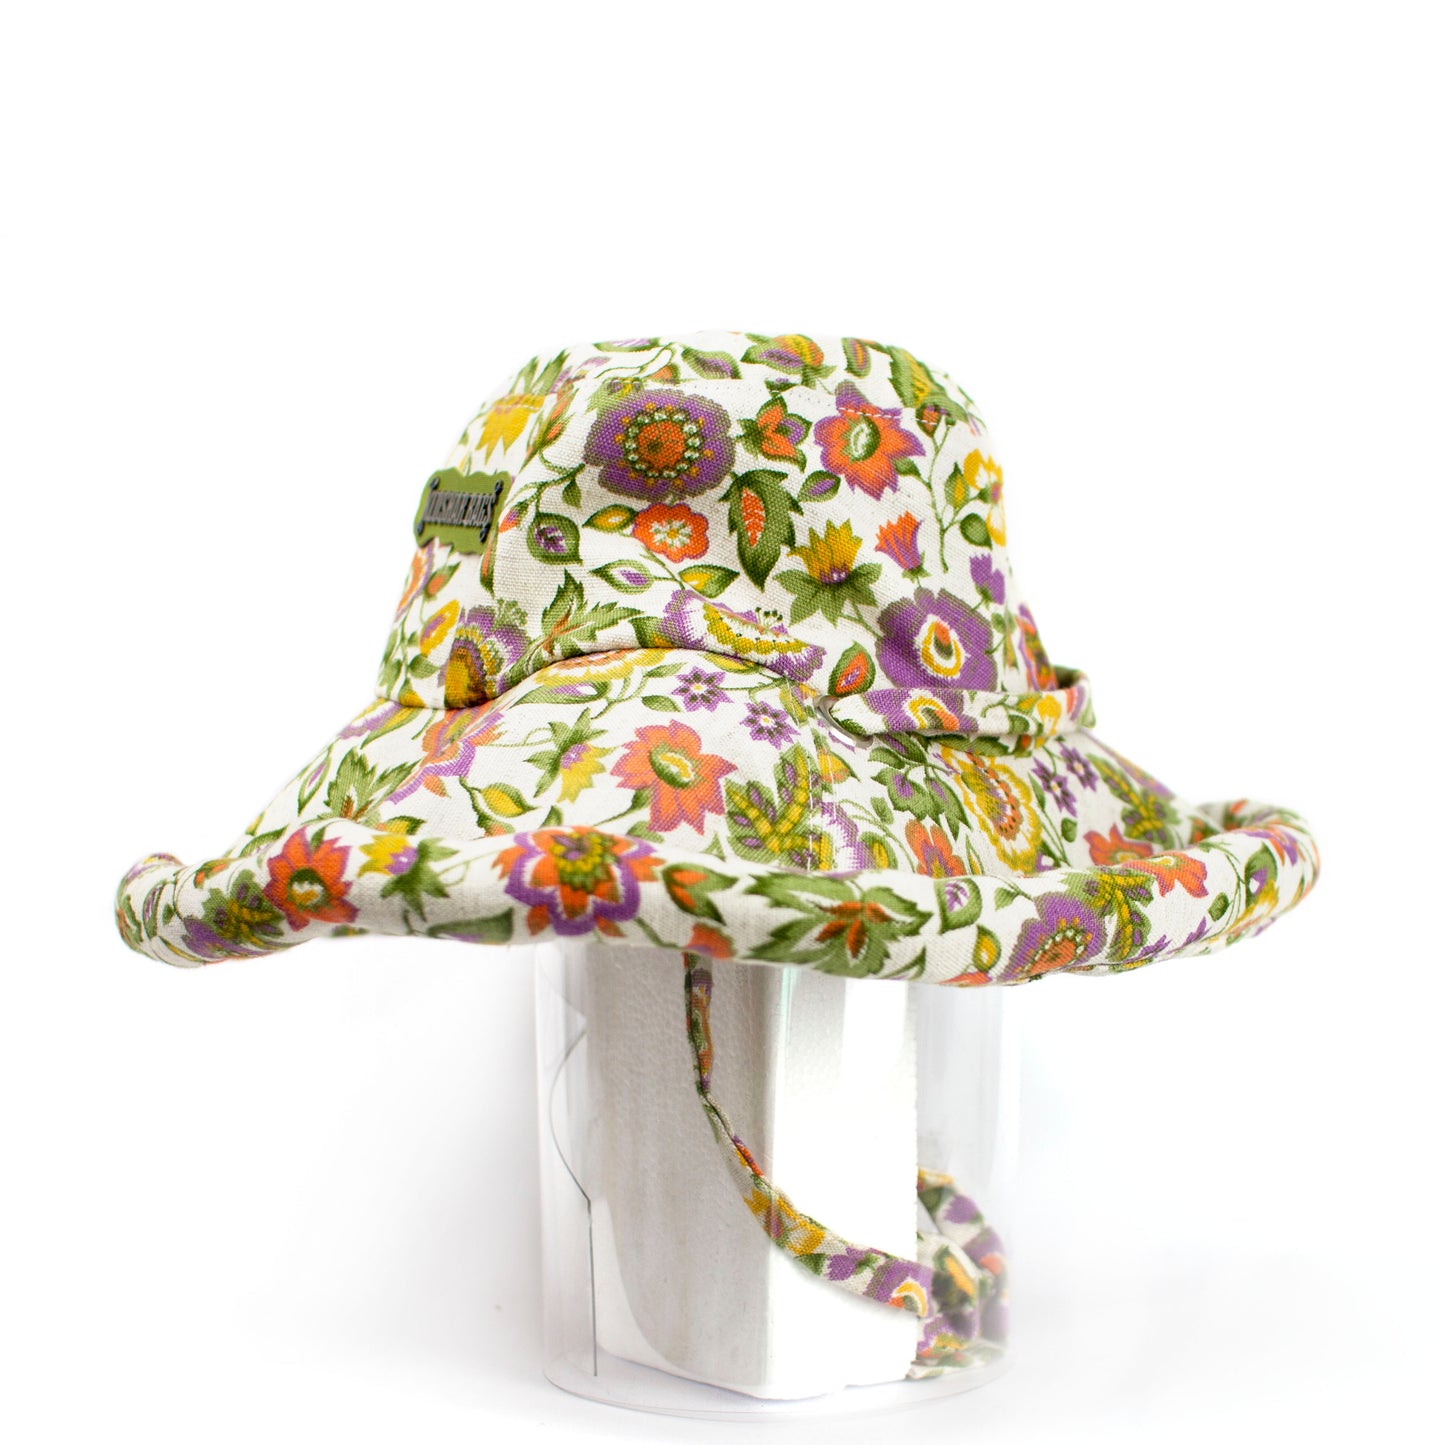 "FLOWERS" large bucket hat